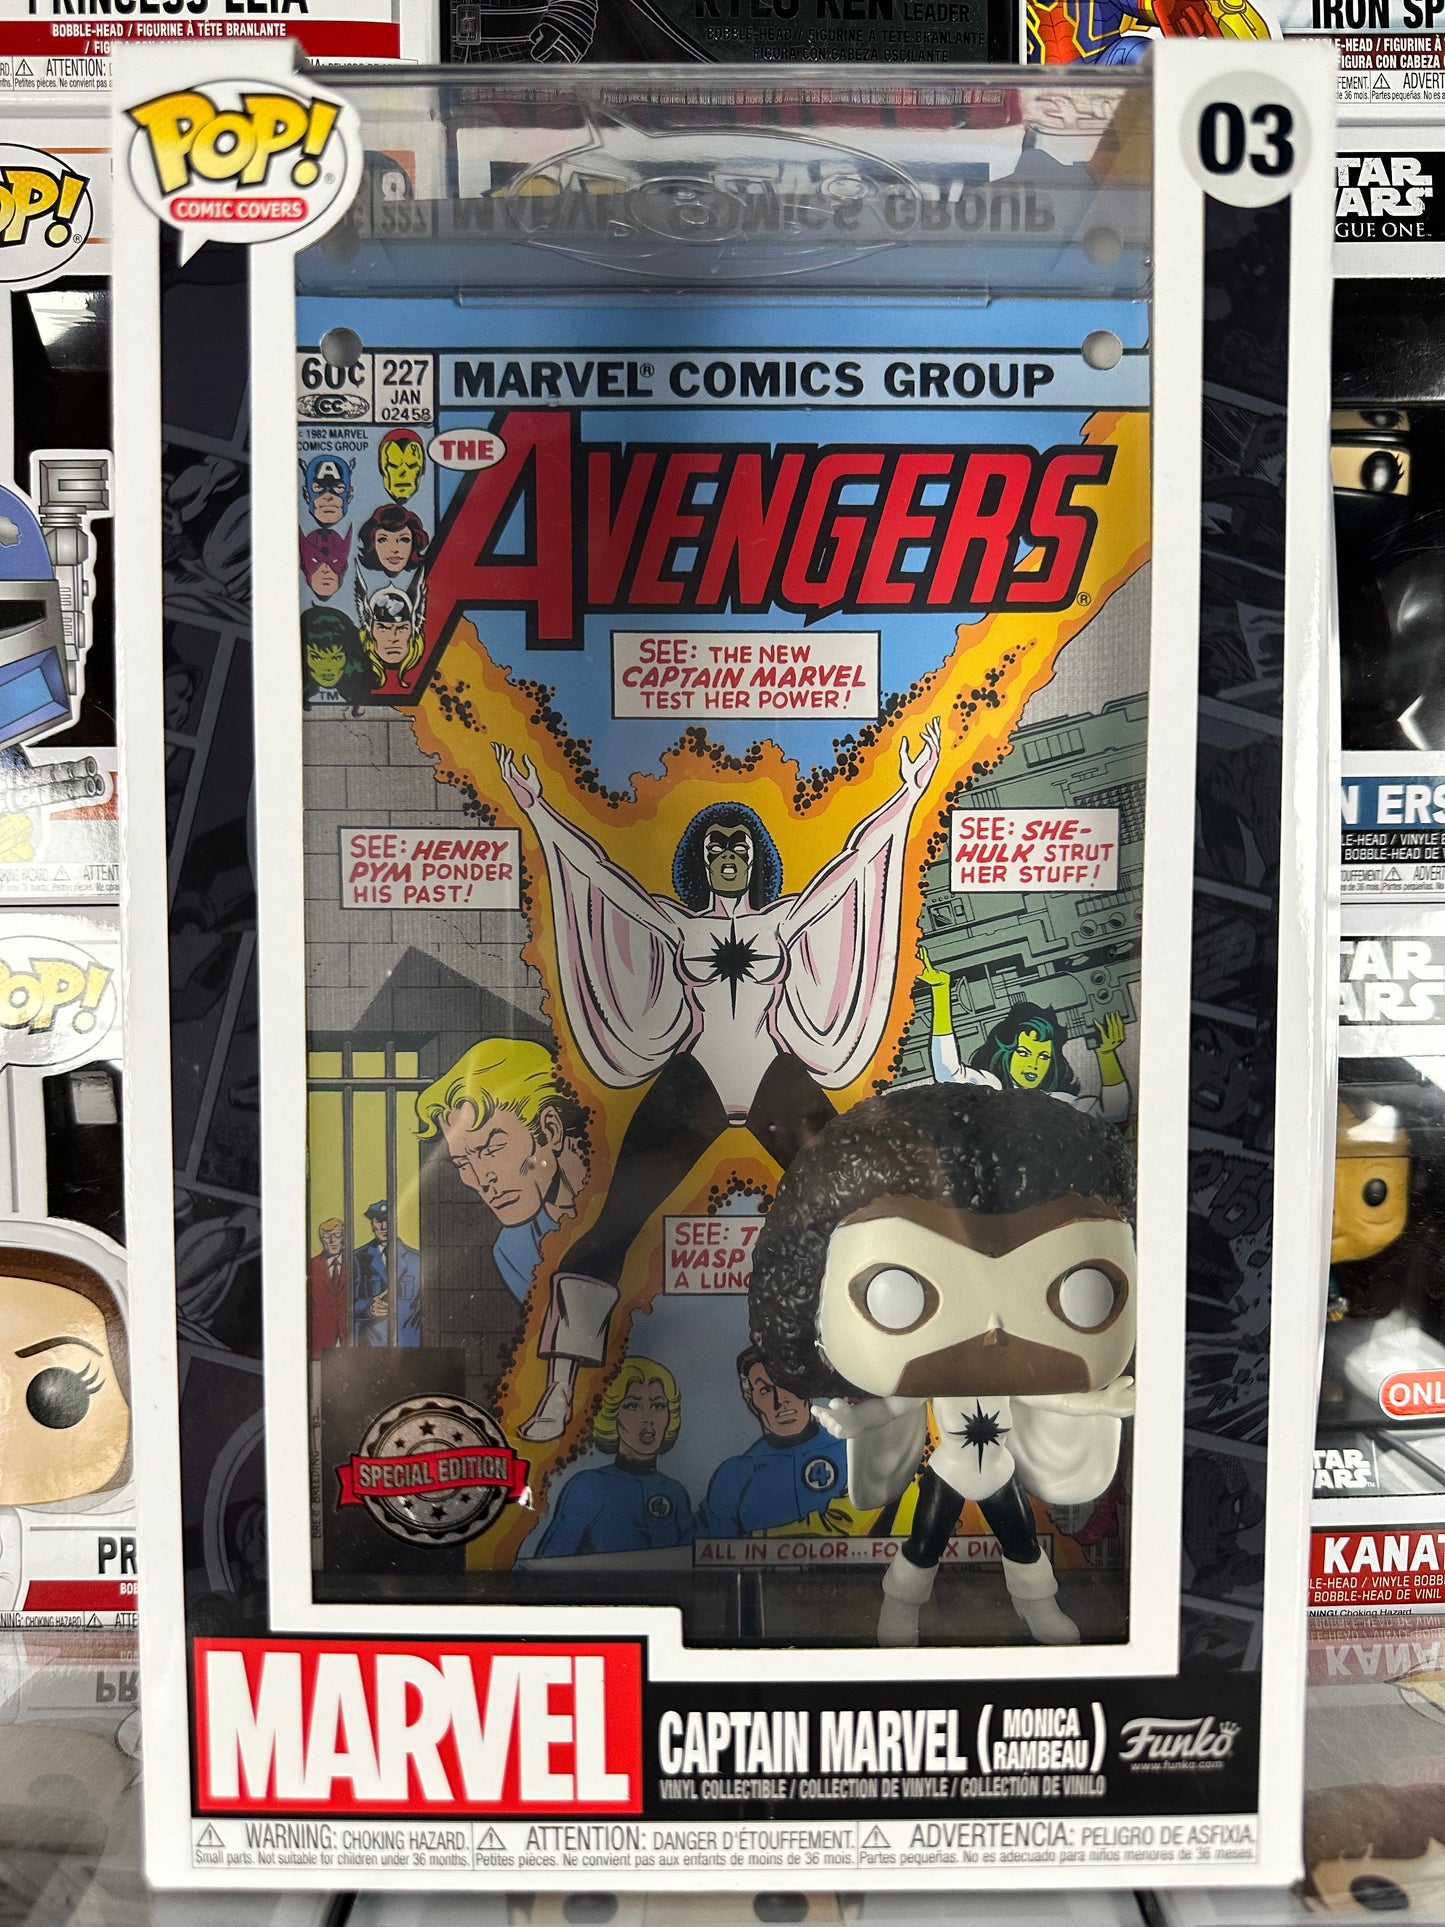 Marvel - Comic Cover - Captain Marvel (Monica Rambeau) (03)